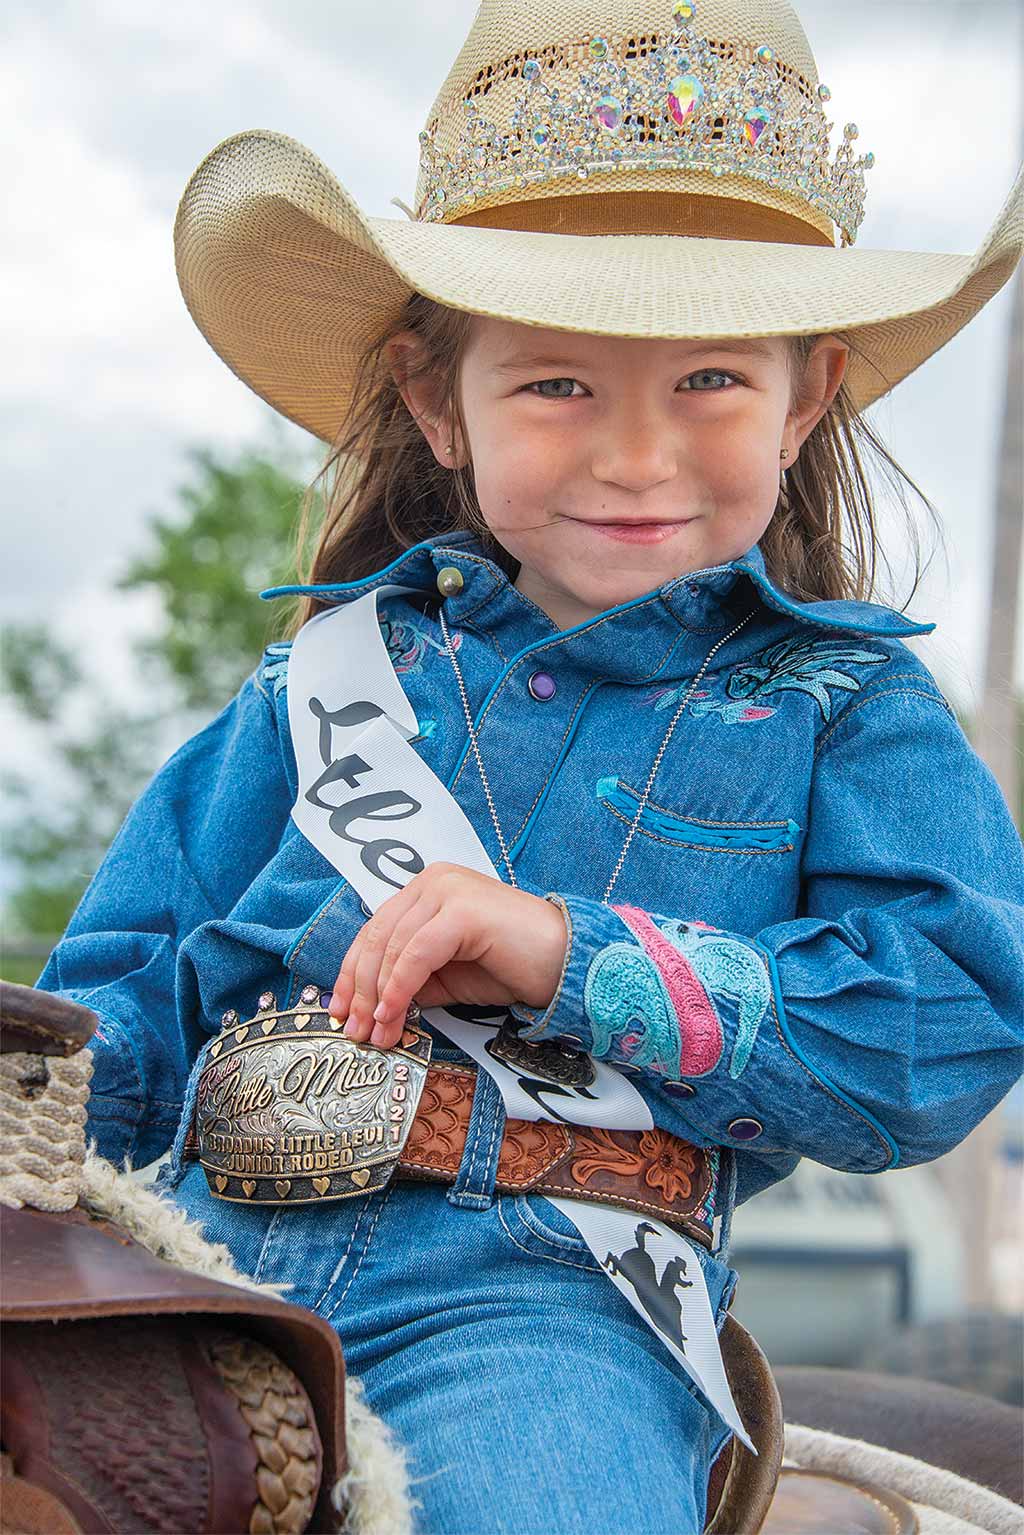 Little girl showing her belt buckle